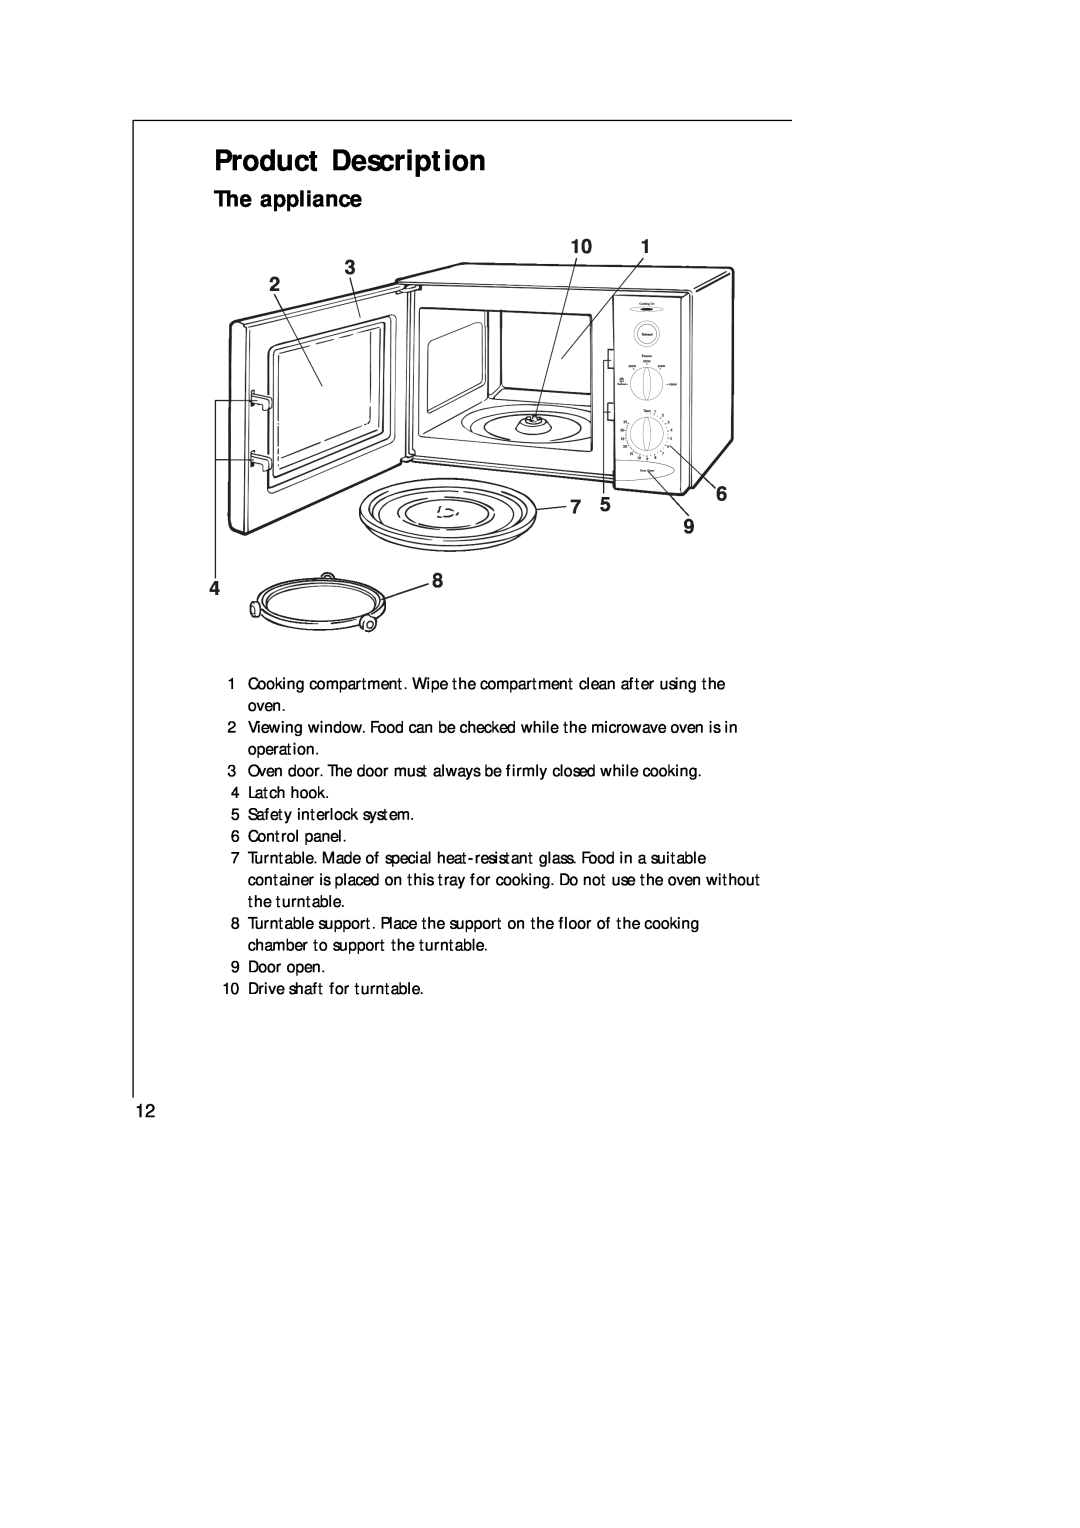 AEG MC_170 manual Product Description, The appliance 